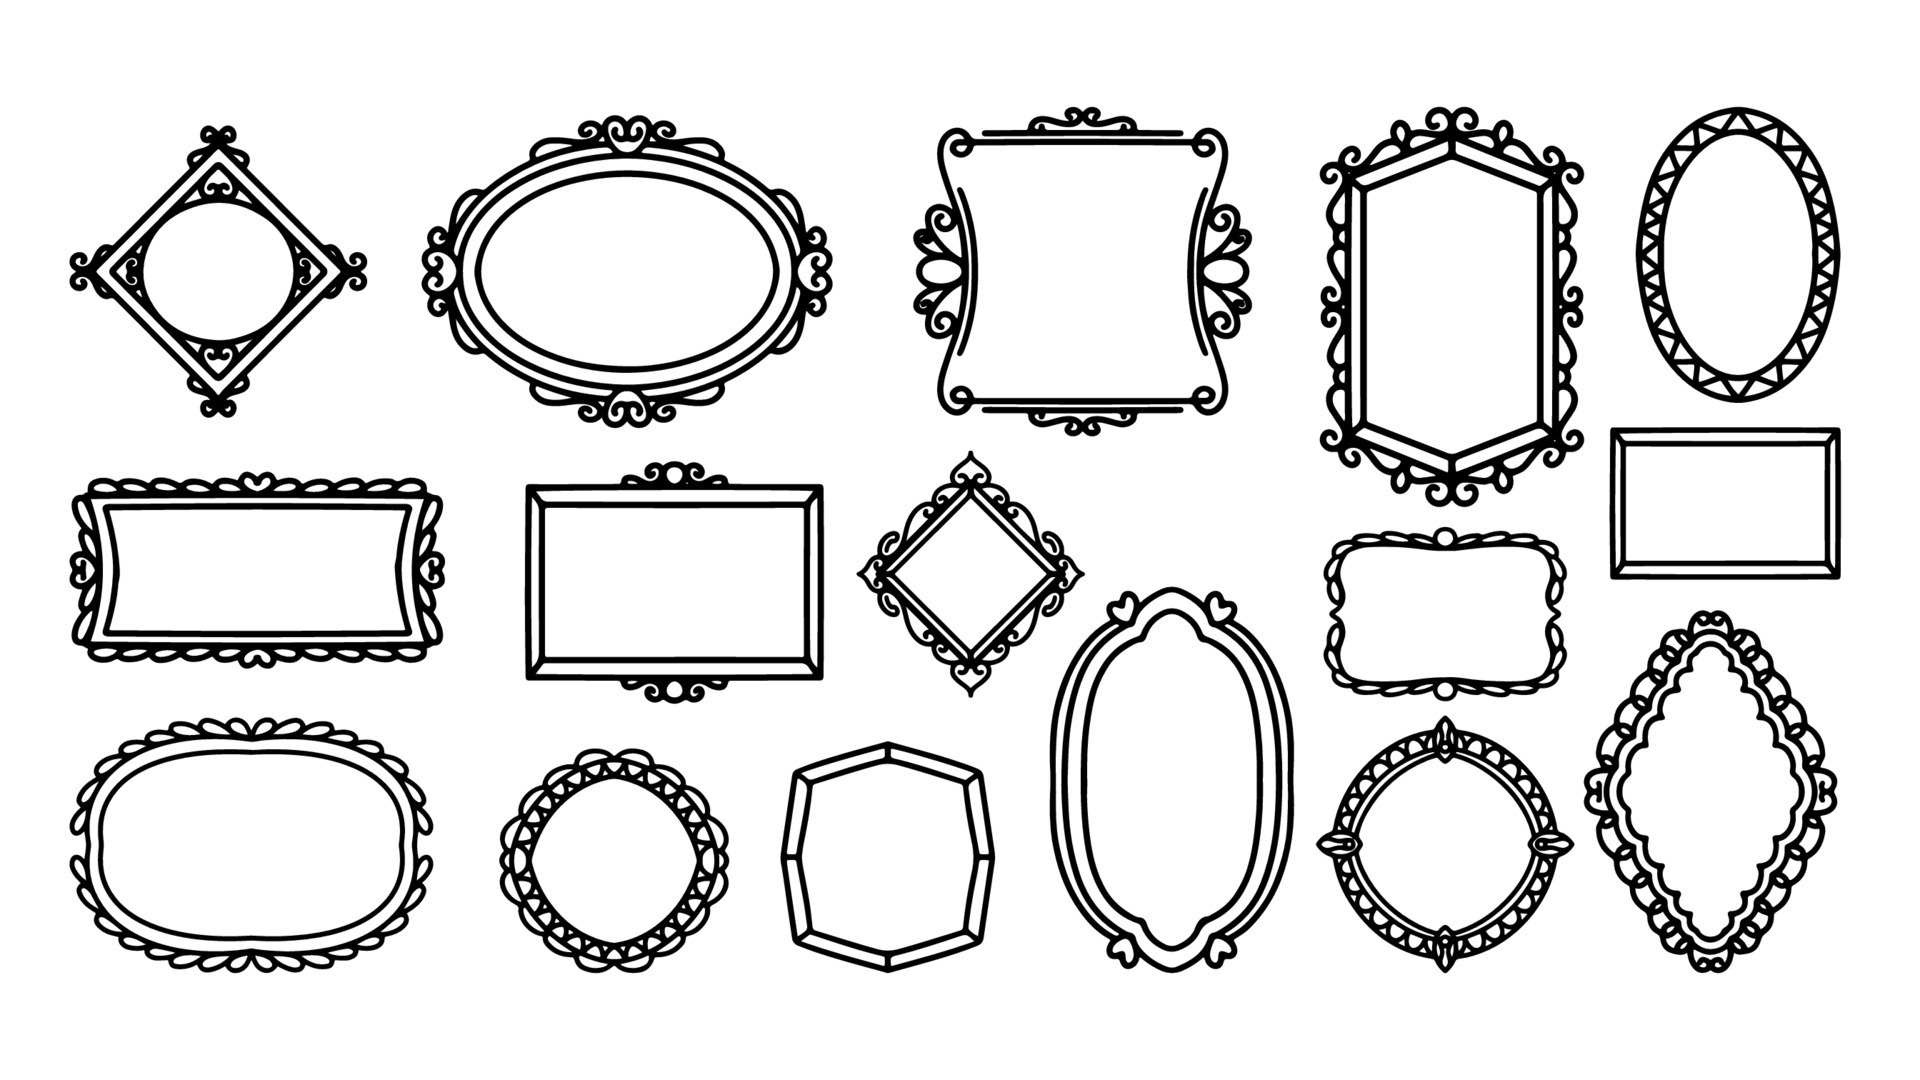 https://static.vecteezy.com/system/resources/previews/024/238/447/original/hand-drawn-frames-vintage-doodle-sketch-picture-frame-illustration-blank-black-square-cadre-rectangle-label-elegant-sketches-line-isolated-on-white-background-vector.jpg